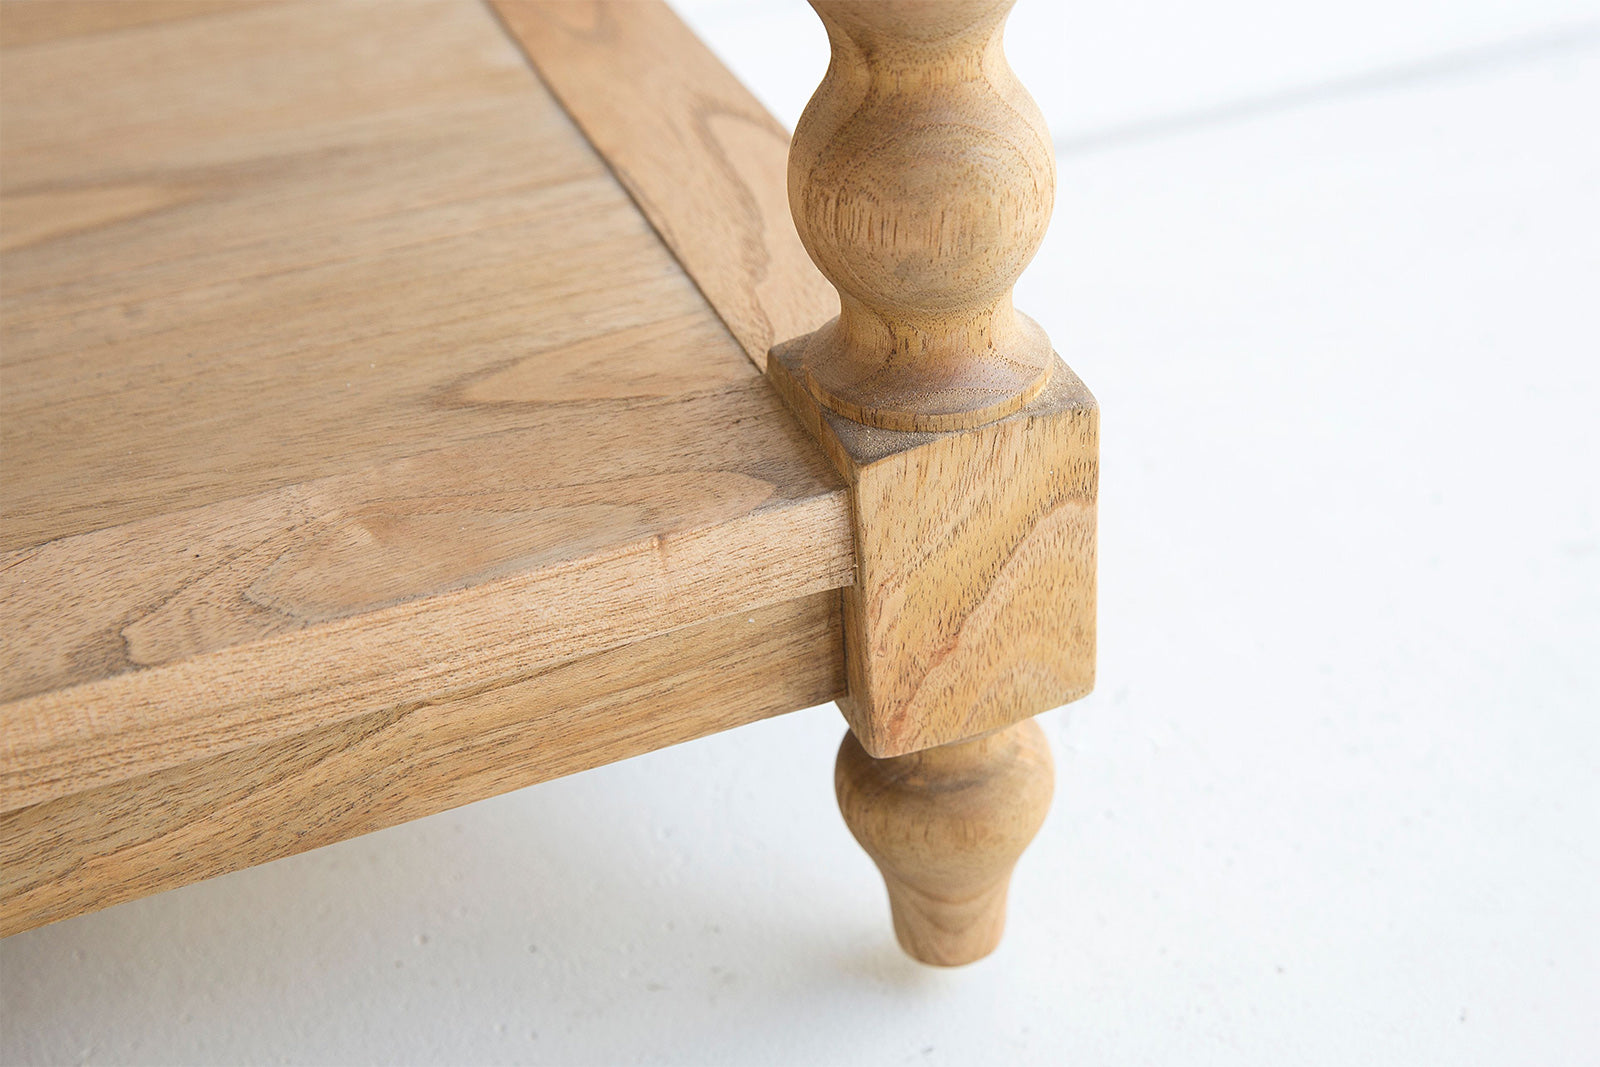 Morningside White Cedar Bobbin Console Table – 3 Drawer – Herringbone Top